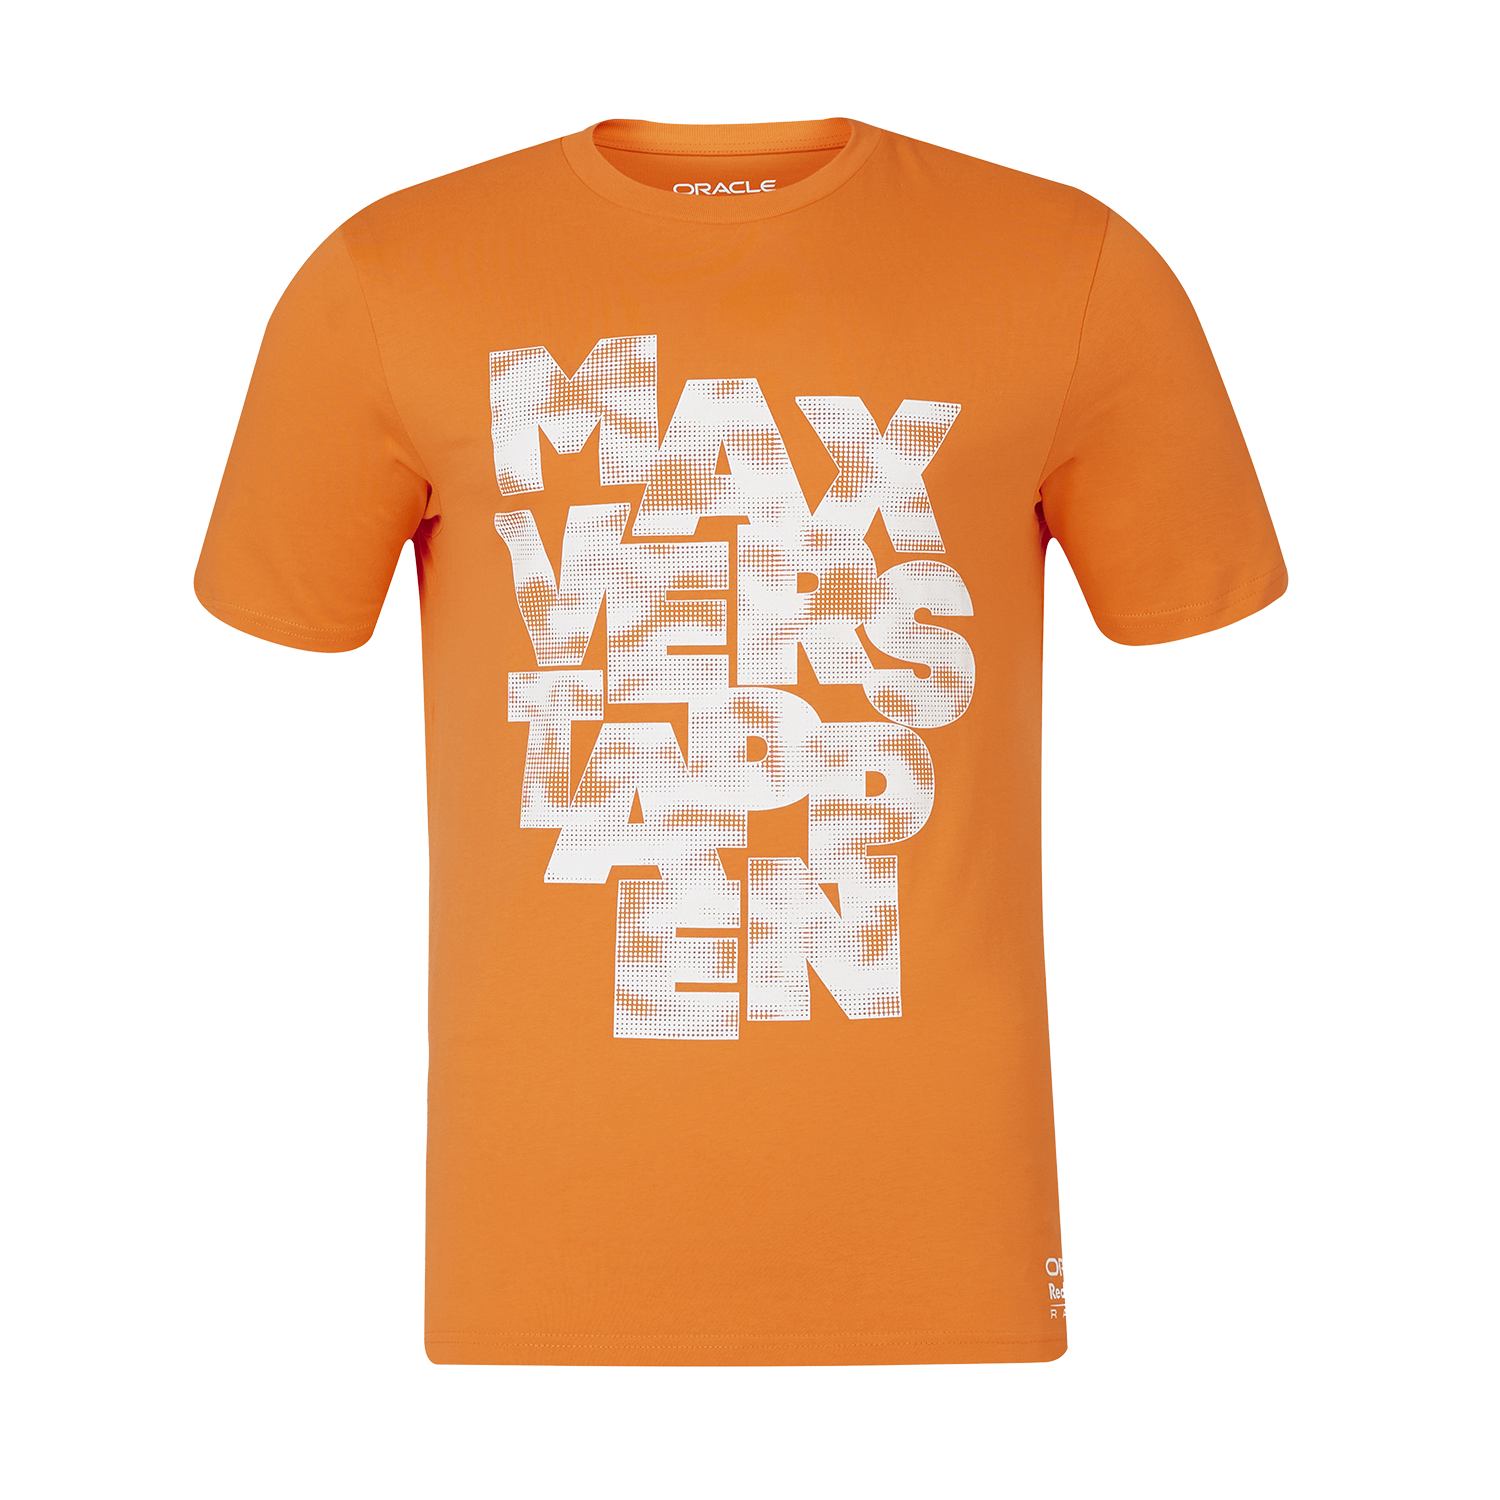 Max Verstappen T-shirt - XS - Red Bull Racing T-Shirt Oranje Max Expression